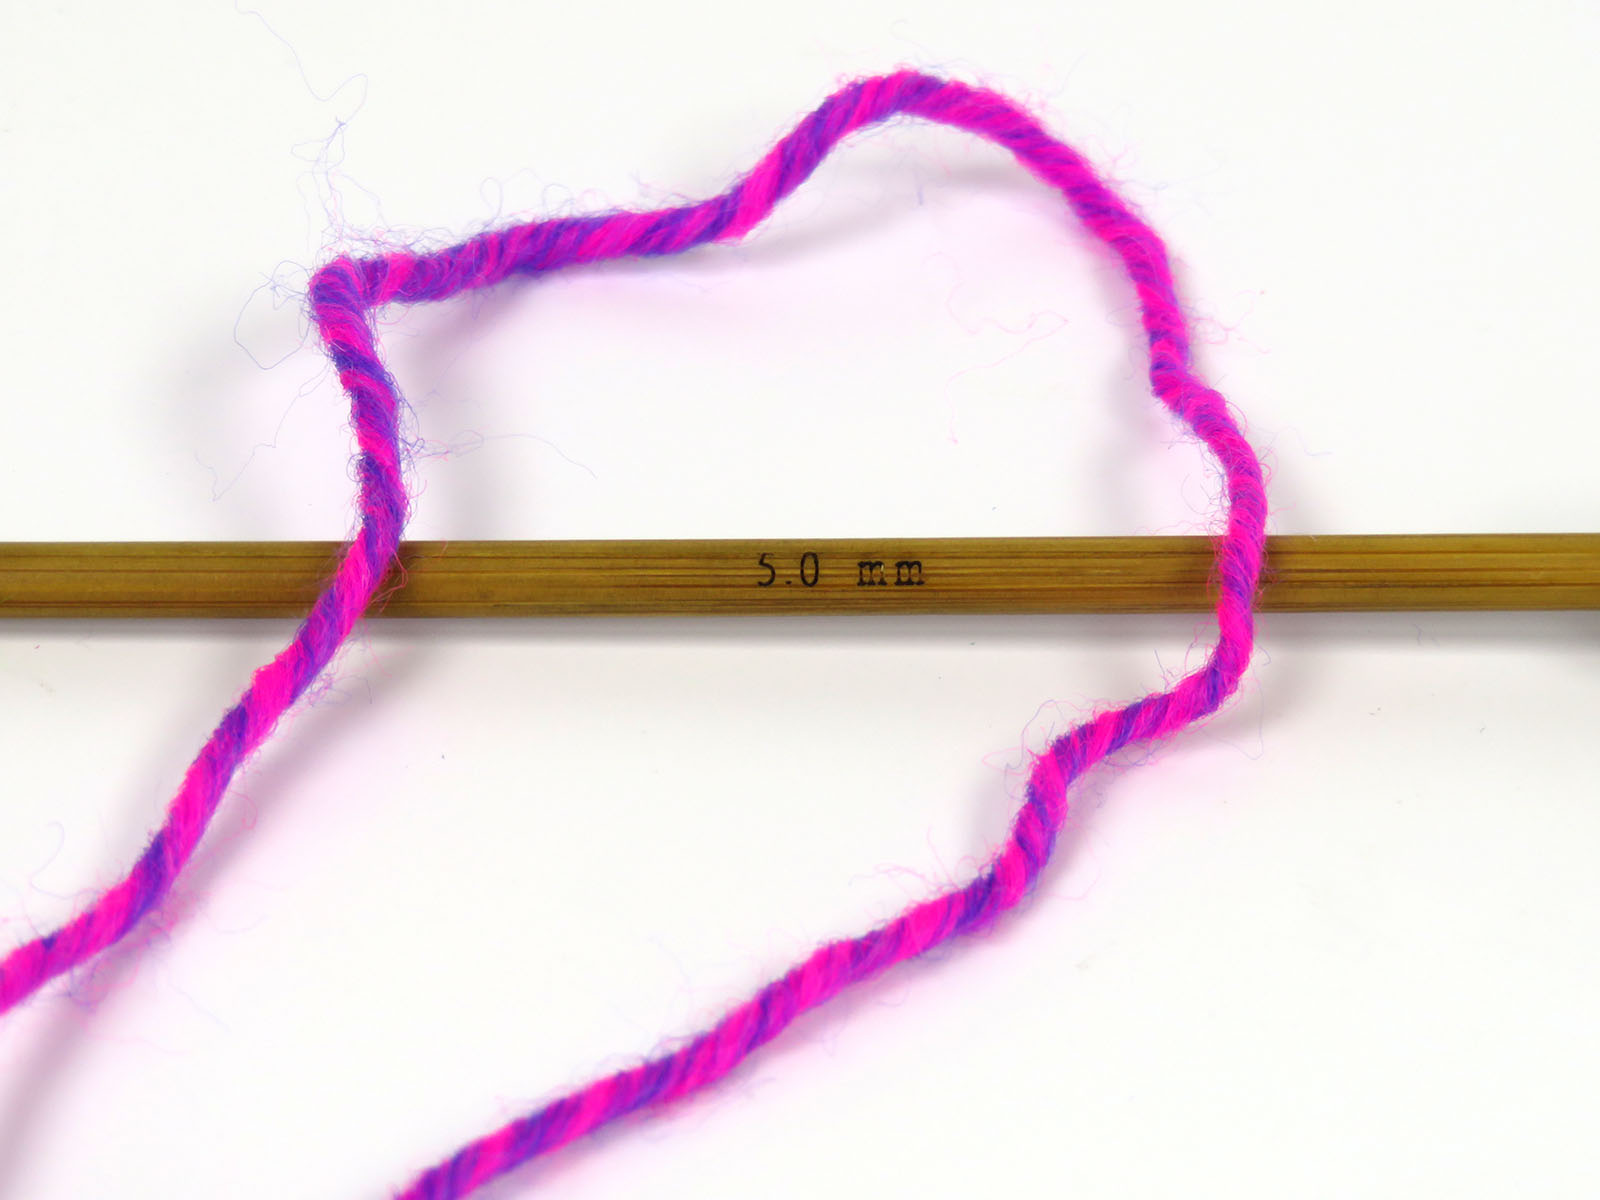 Fantasia Acrylic Yarn, L: 35 m, Maxi, neon pink, 50 g/ 1 ball